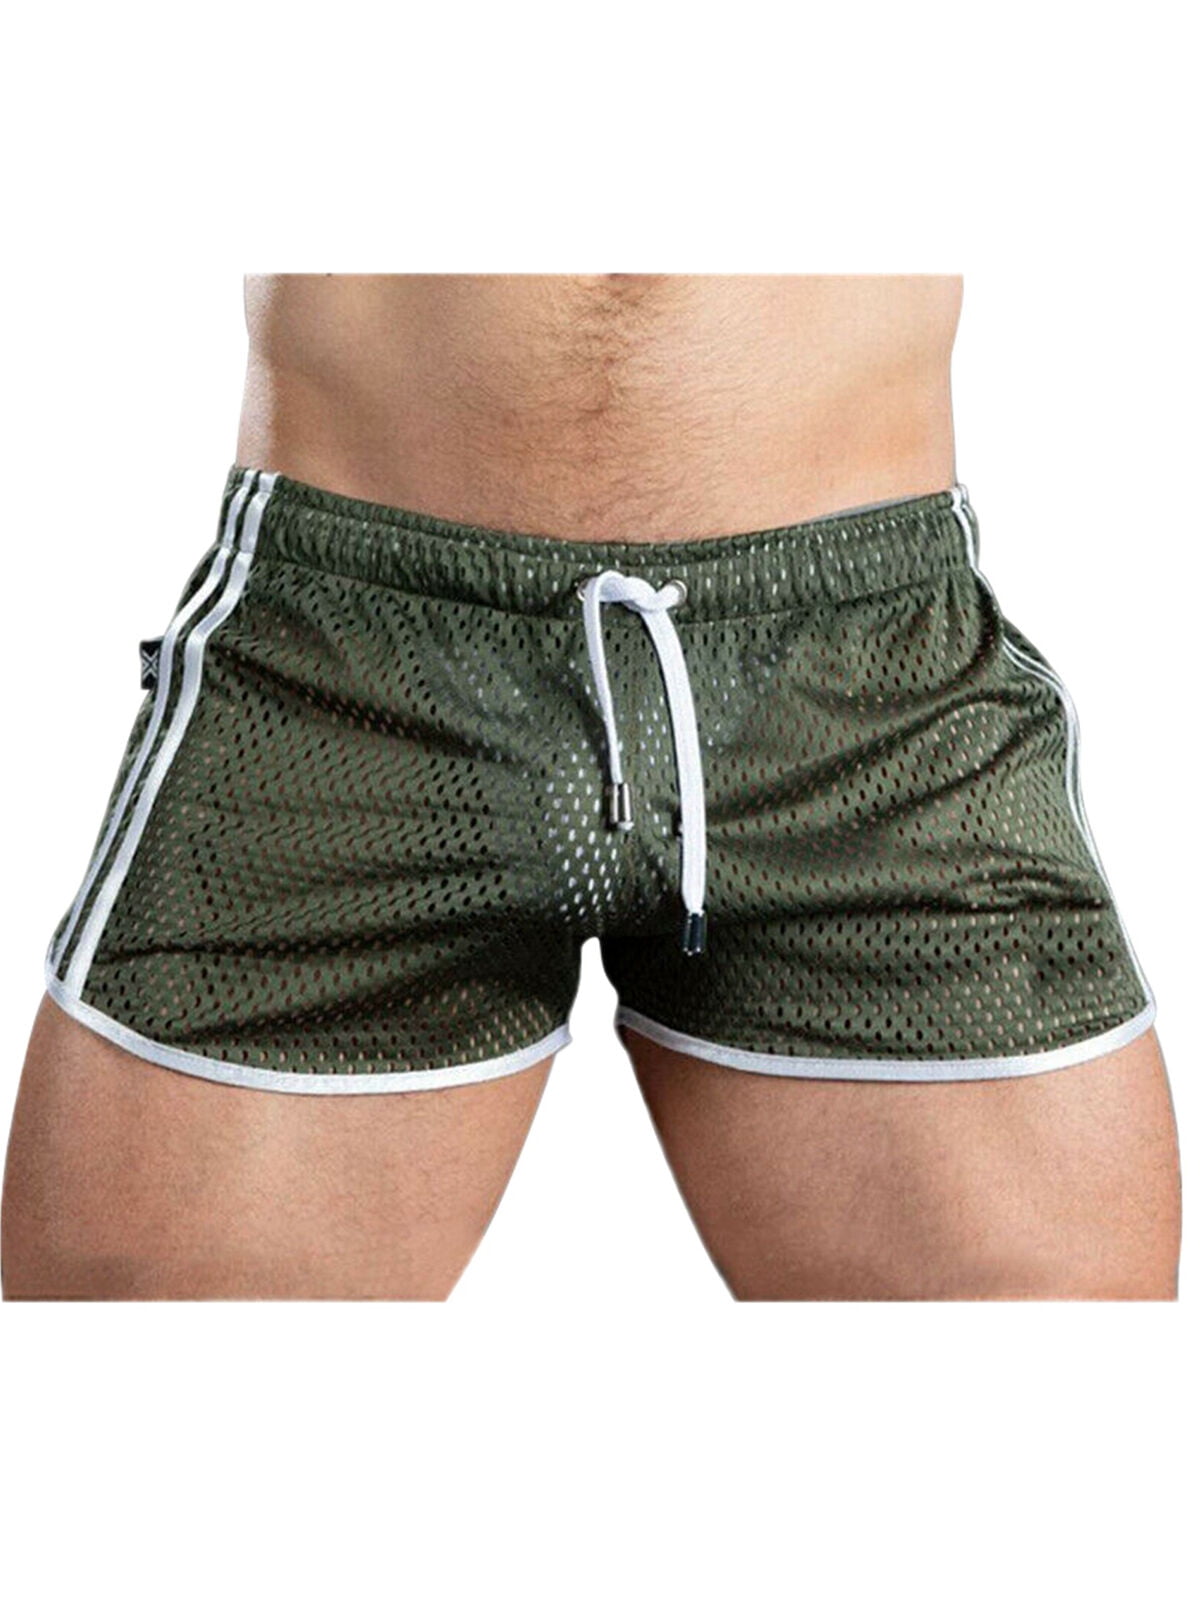 adidas Originals Men's 3-Stripes Shorts | Dick's Sporting Goods